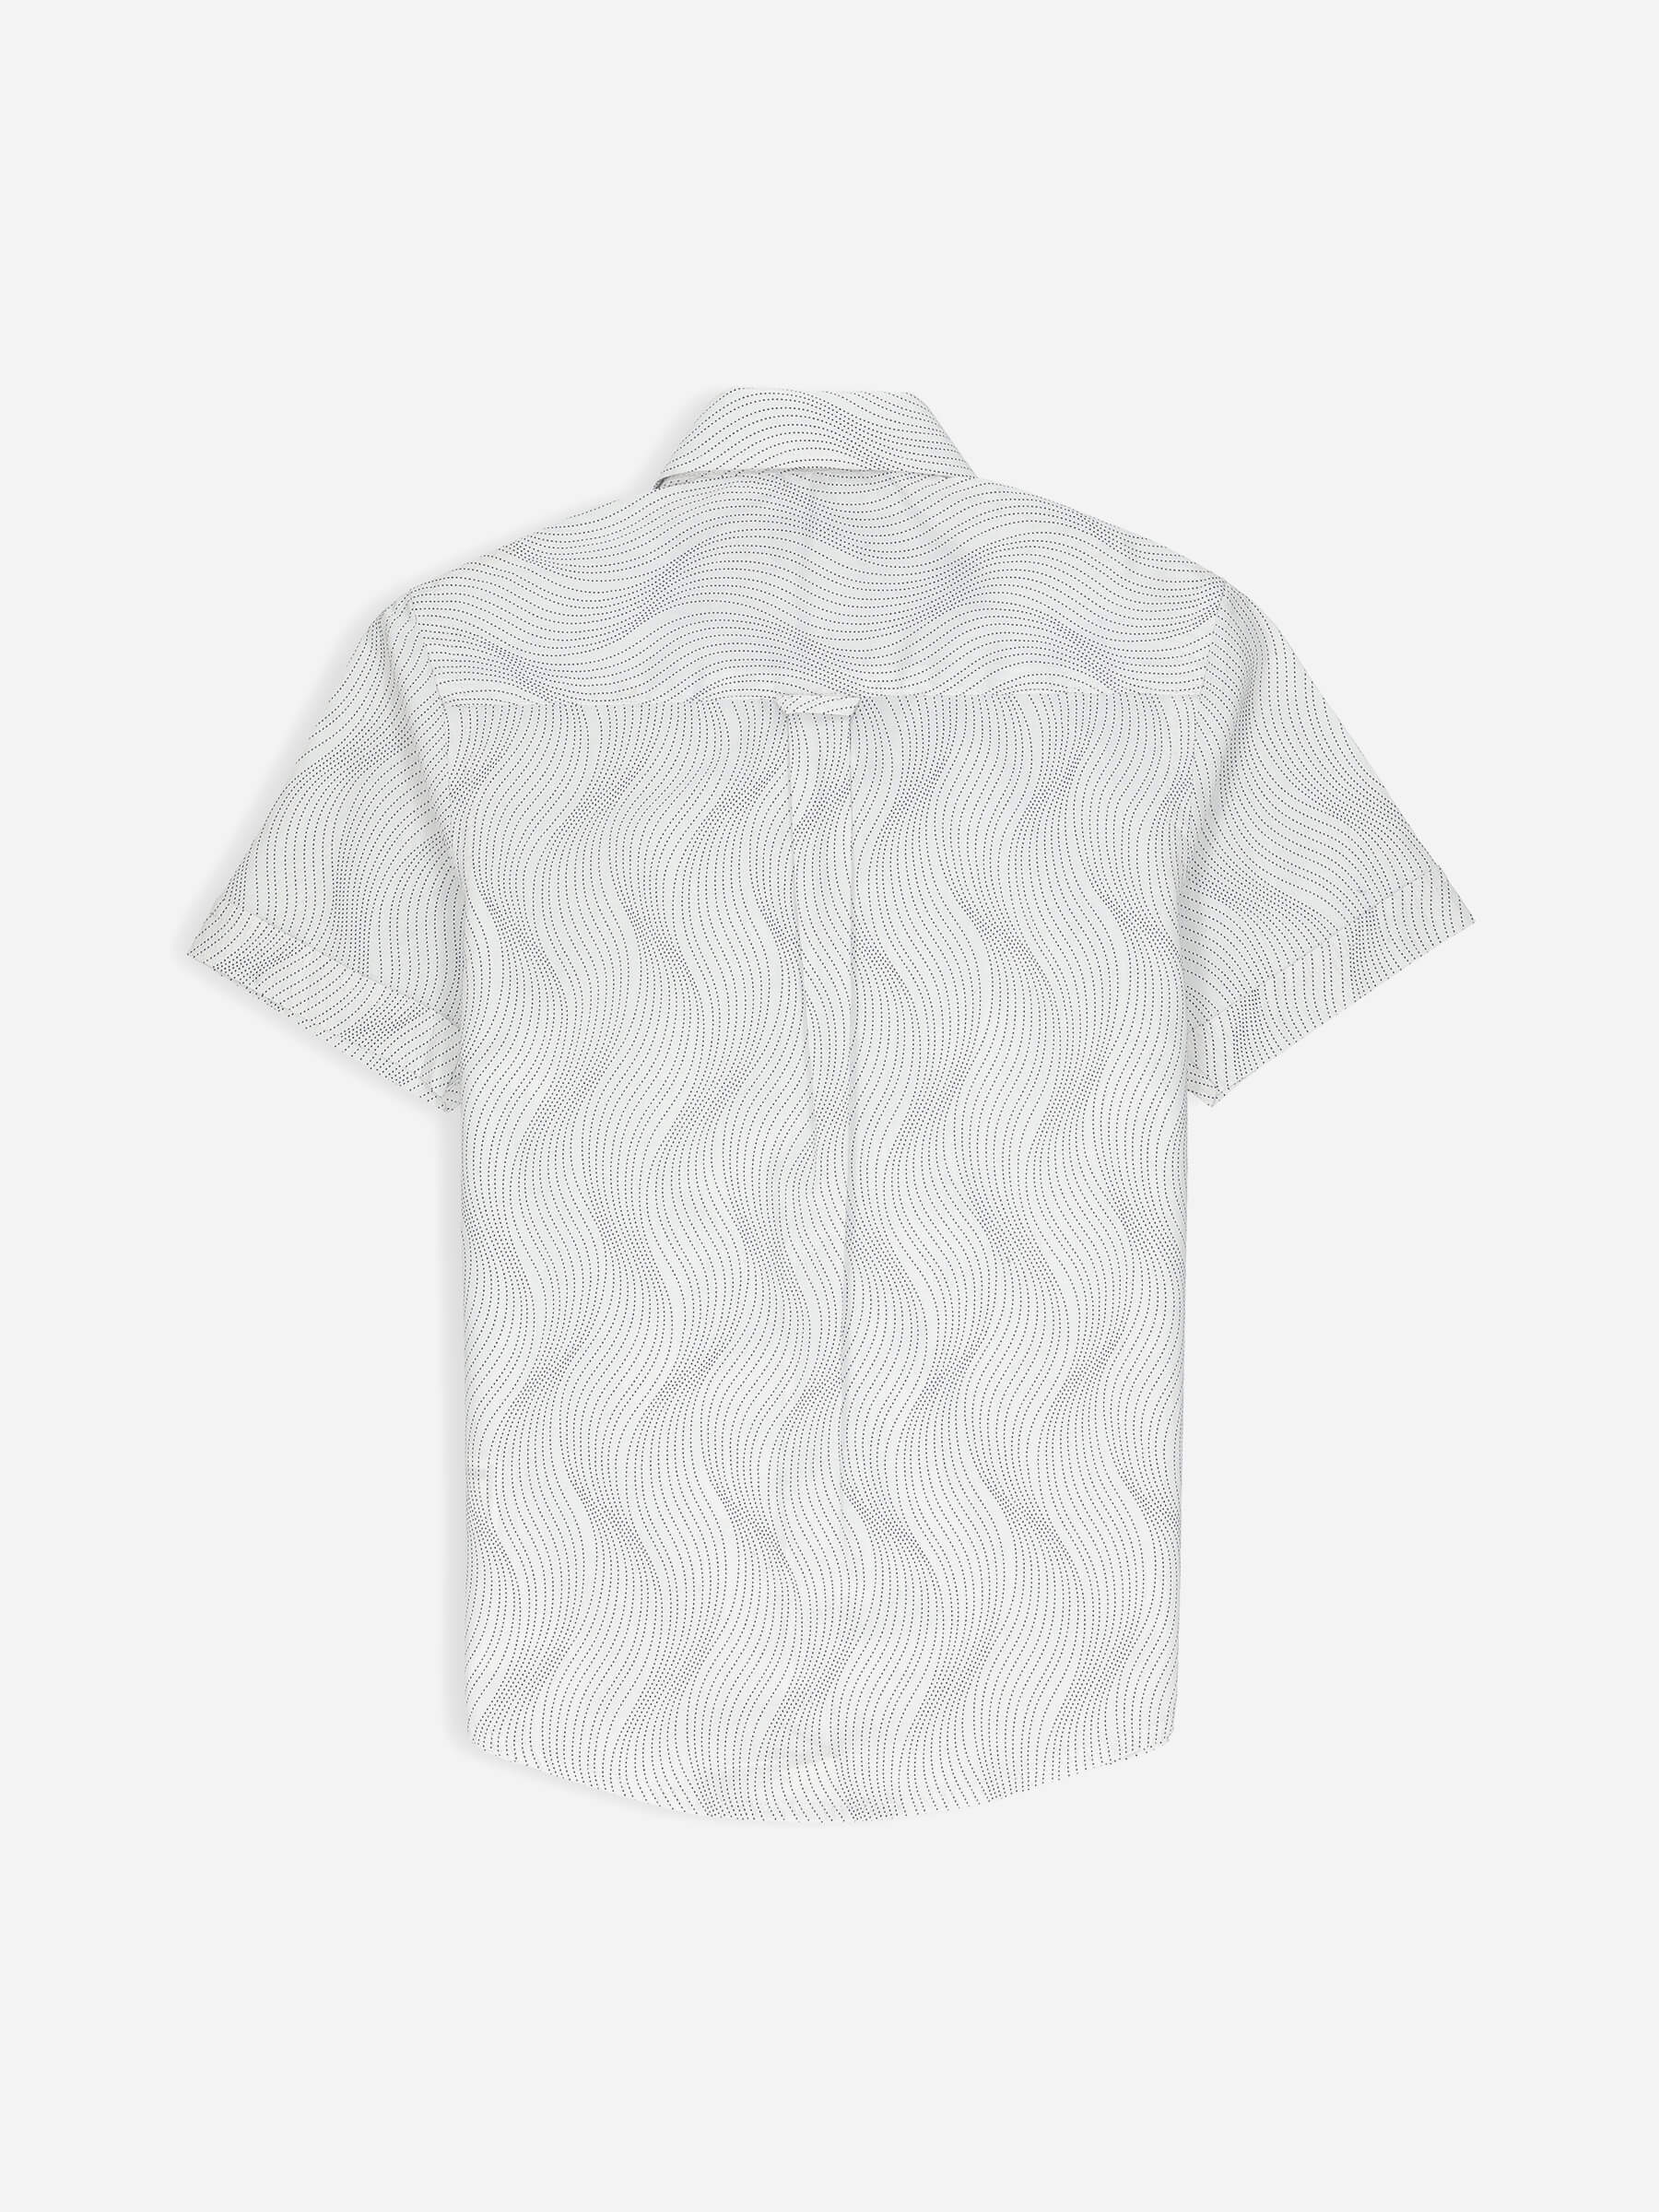 White Geometric Printed Half Sleeve Shirt Brumano Pakistan